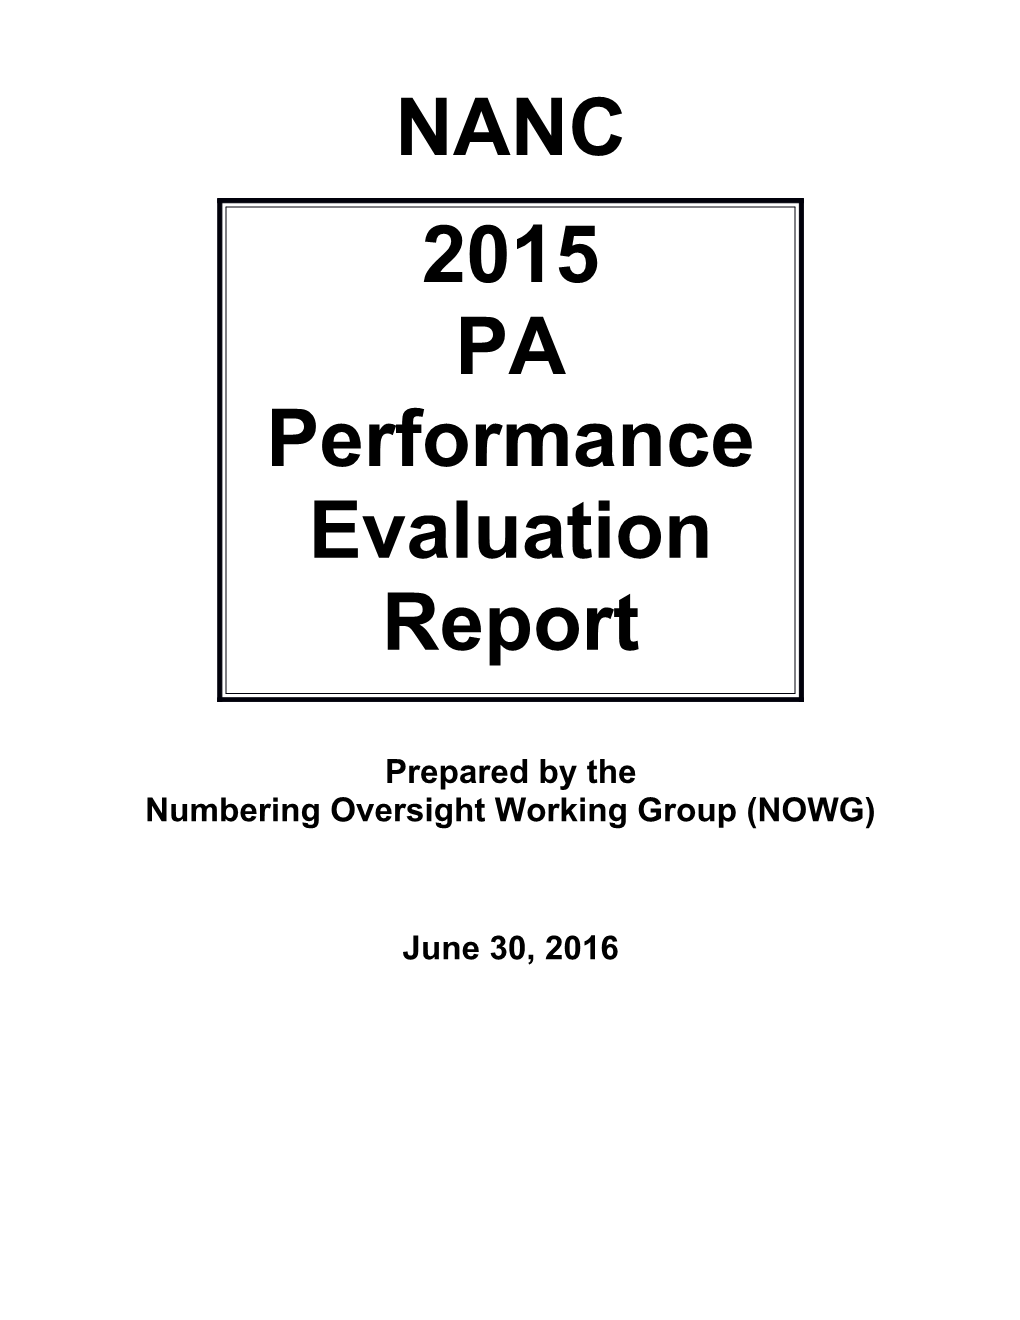 Preliminary PA 2006 Annual Performance Report